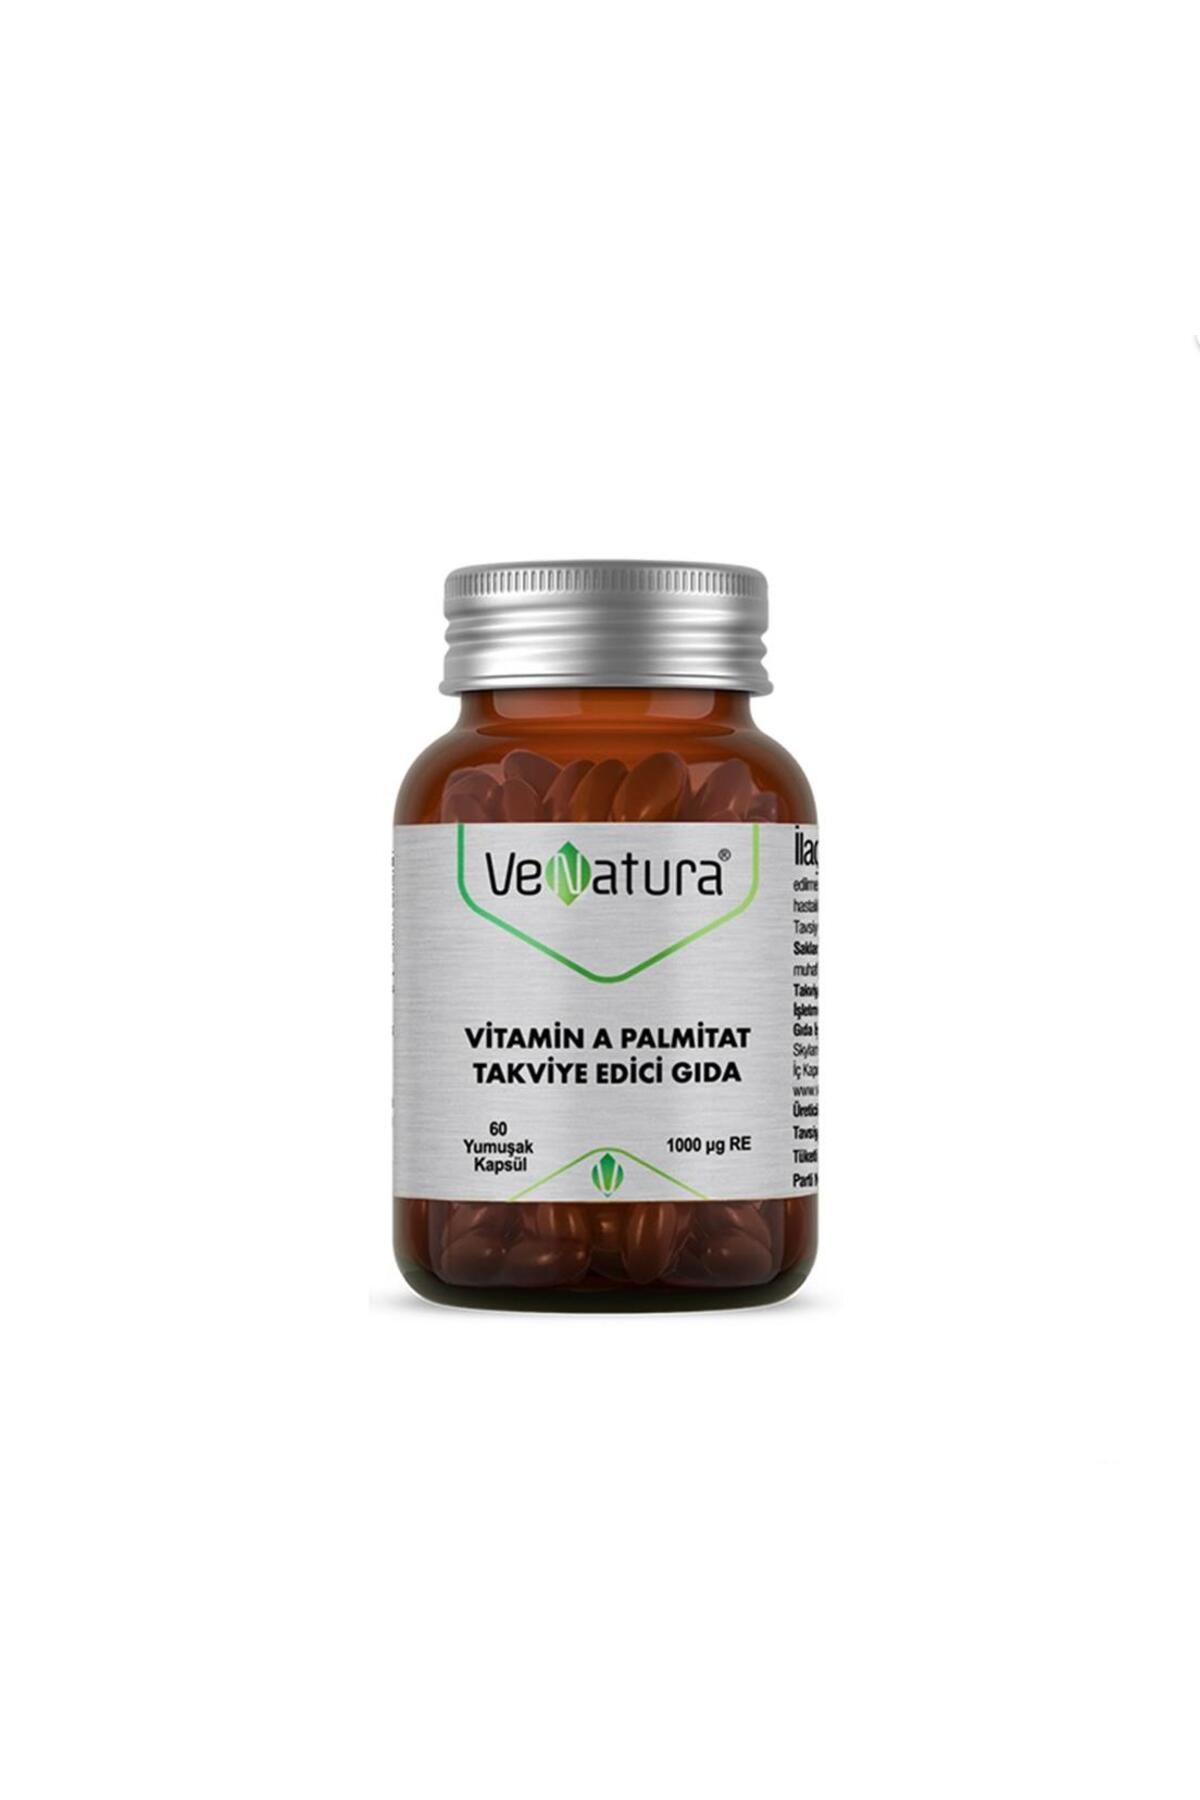 Vaseline Venatura Vitamin A Palmitat 60 Yumuşak Kapsül